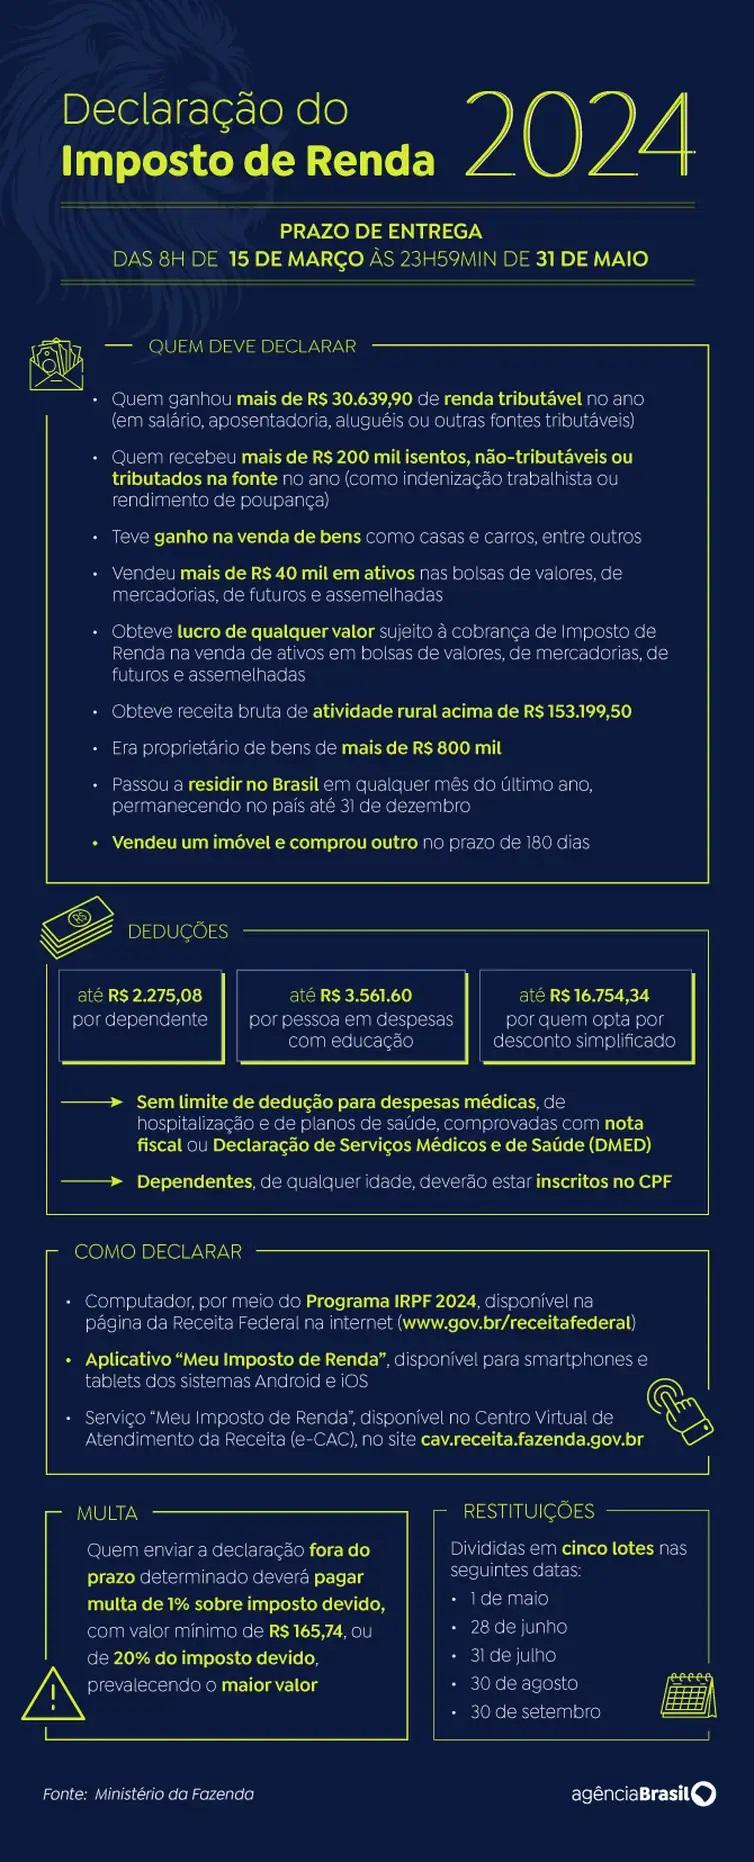 Imposto de Renda 2024 (Arte / Agência Brasil)